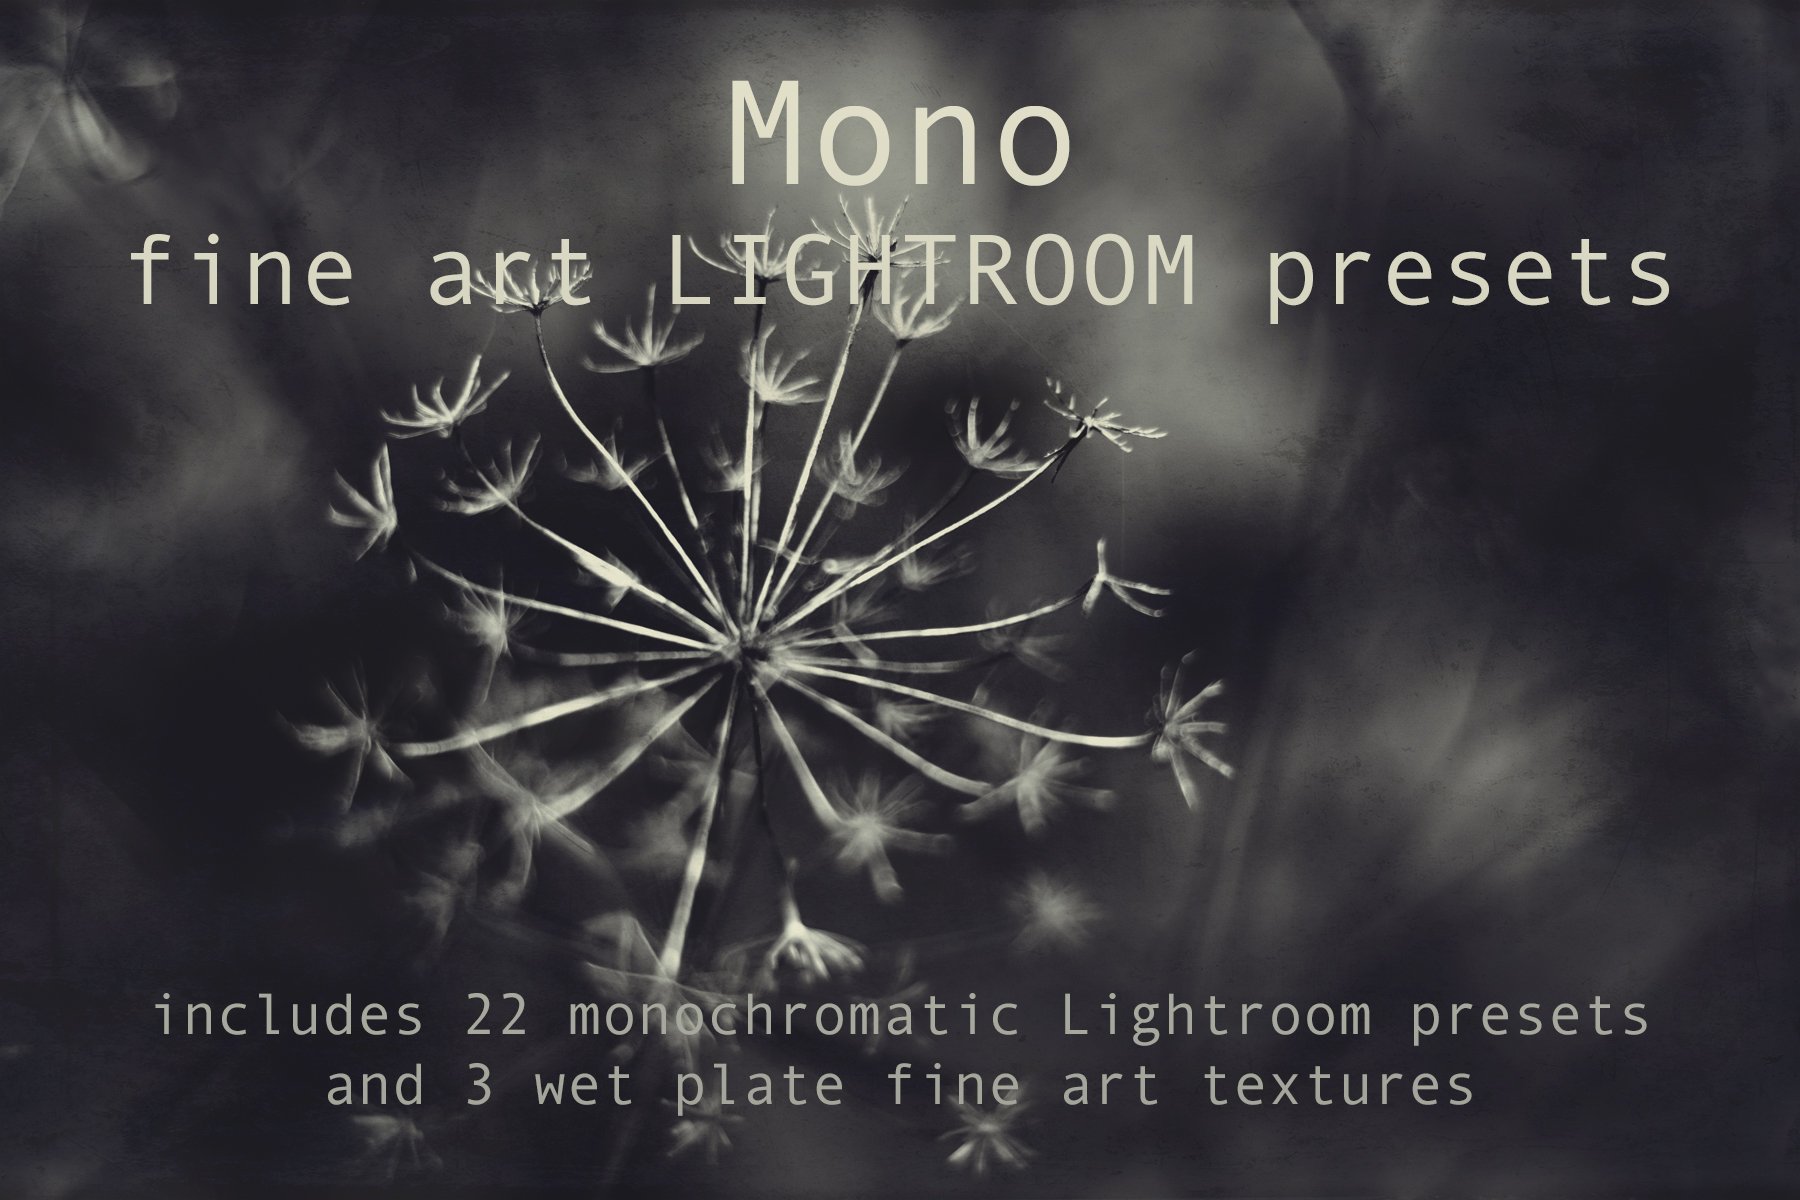 Mono Fine Art Lightroom Presetscover image.